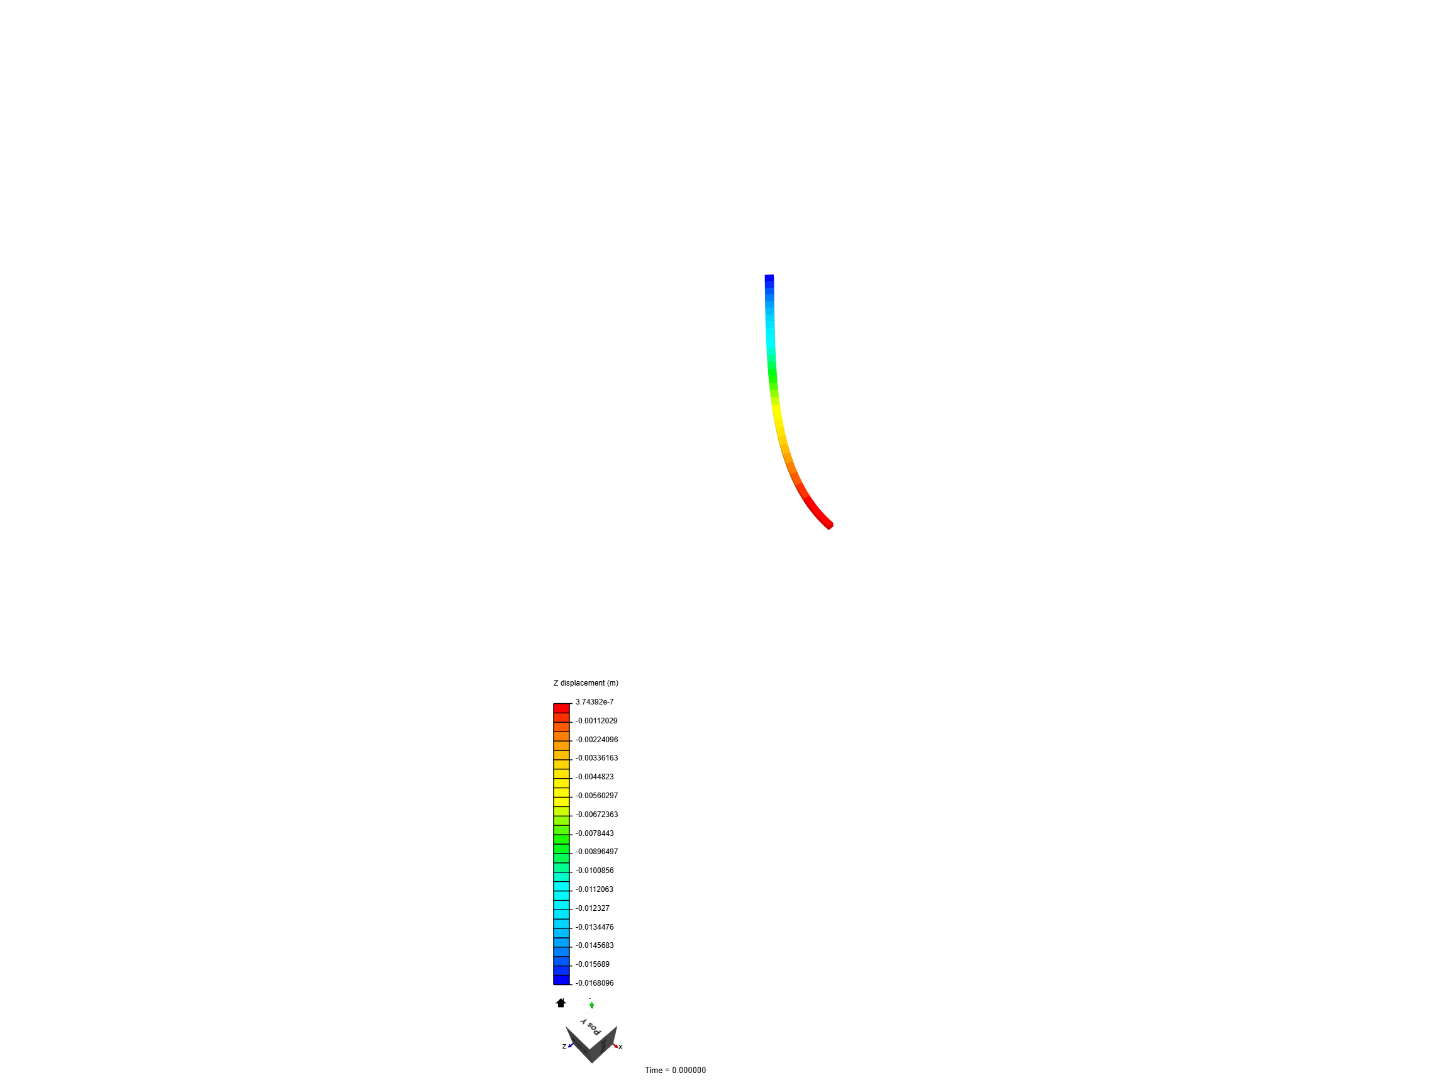 Cantilever Beam Bending Analysis image